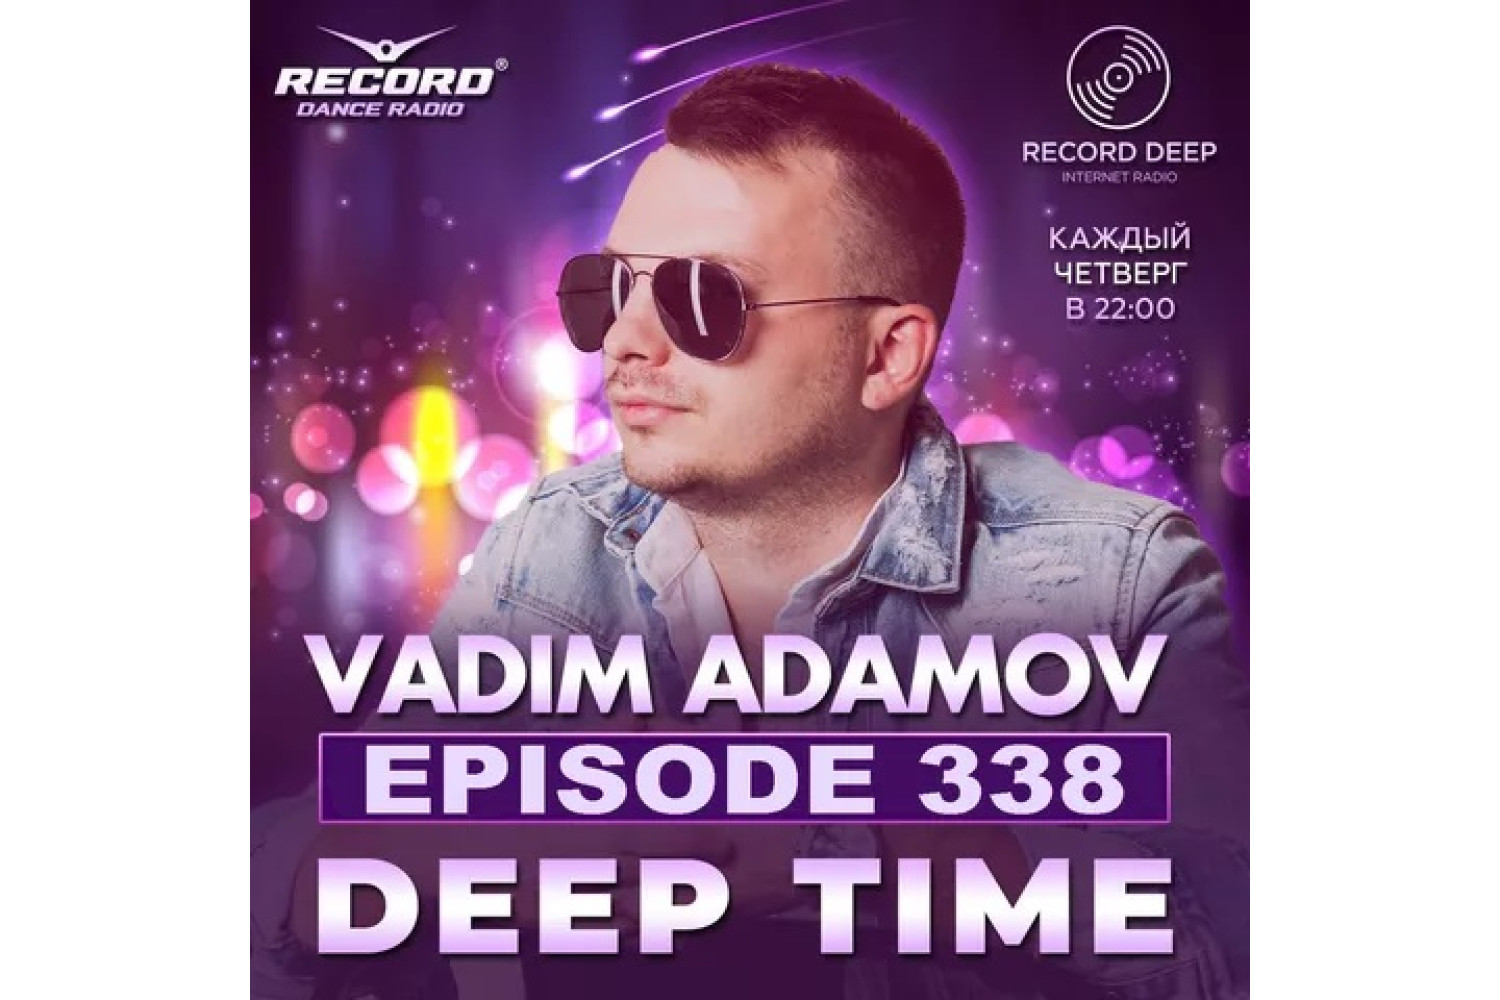 Vadim Adamov - DEEP TIME EPISODE#338 Record Deep 04 01